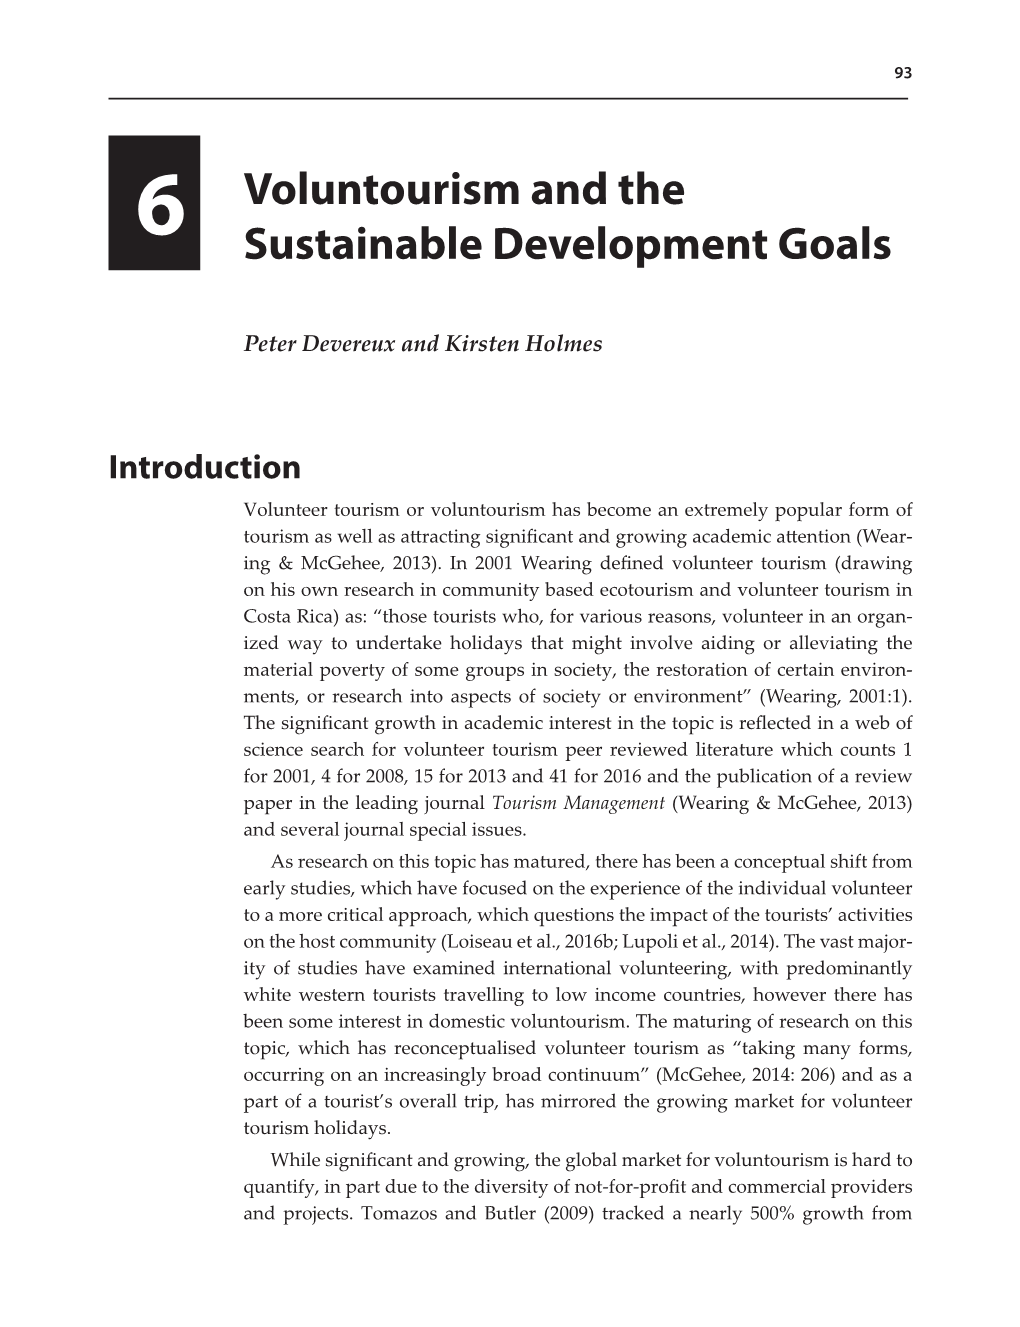 6 Voluntourism and the Sustainable Development Goals